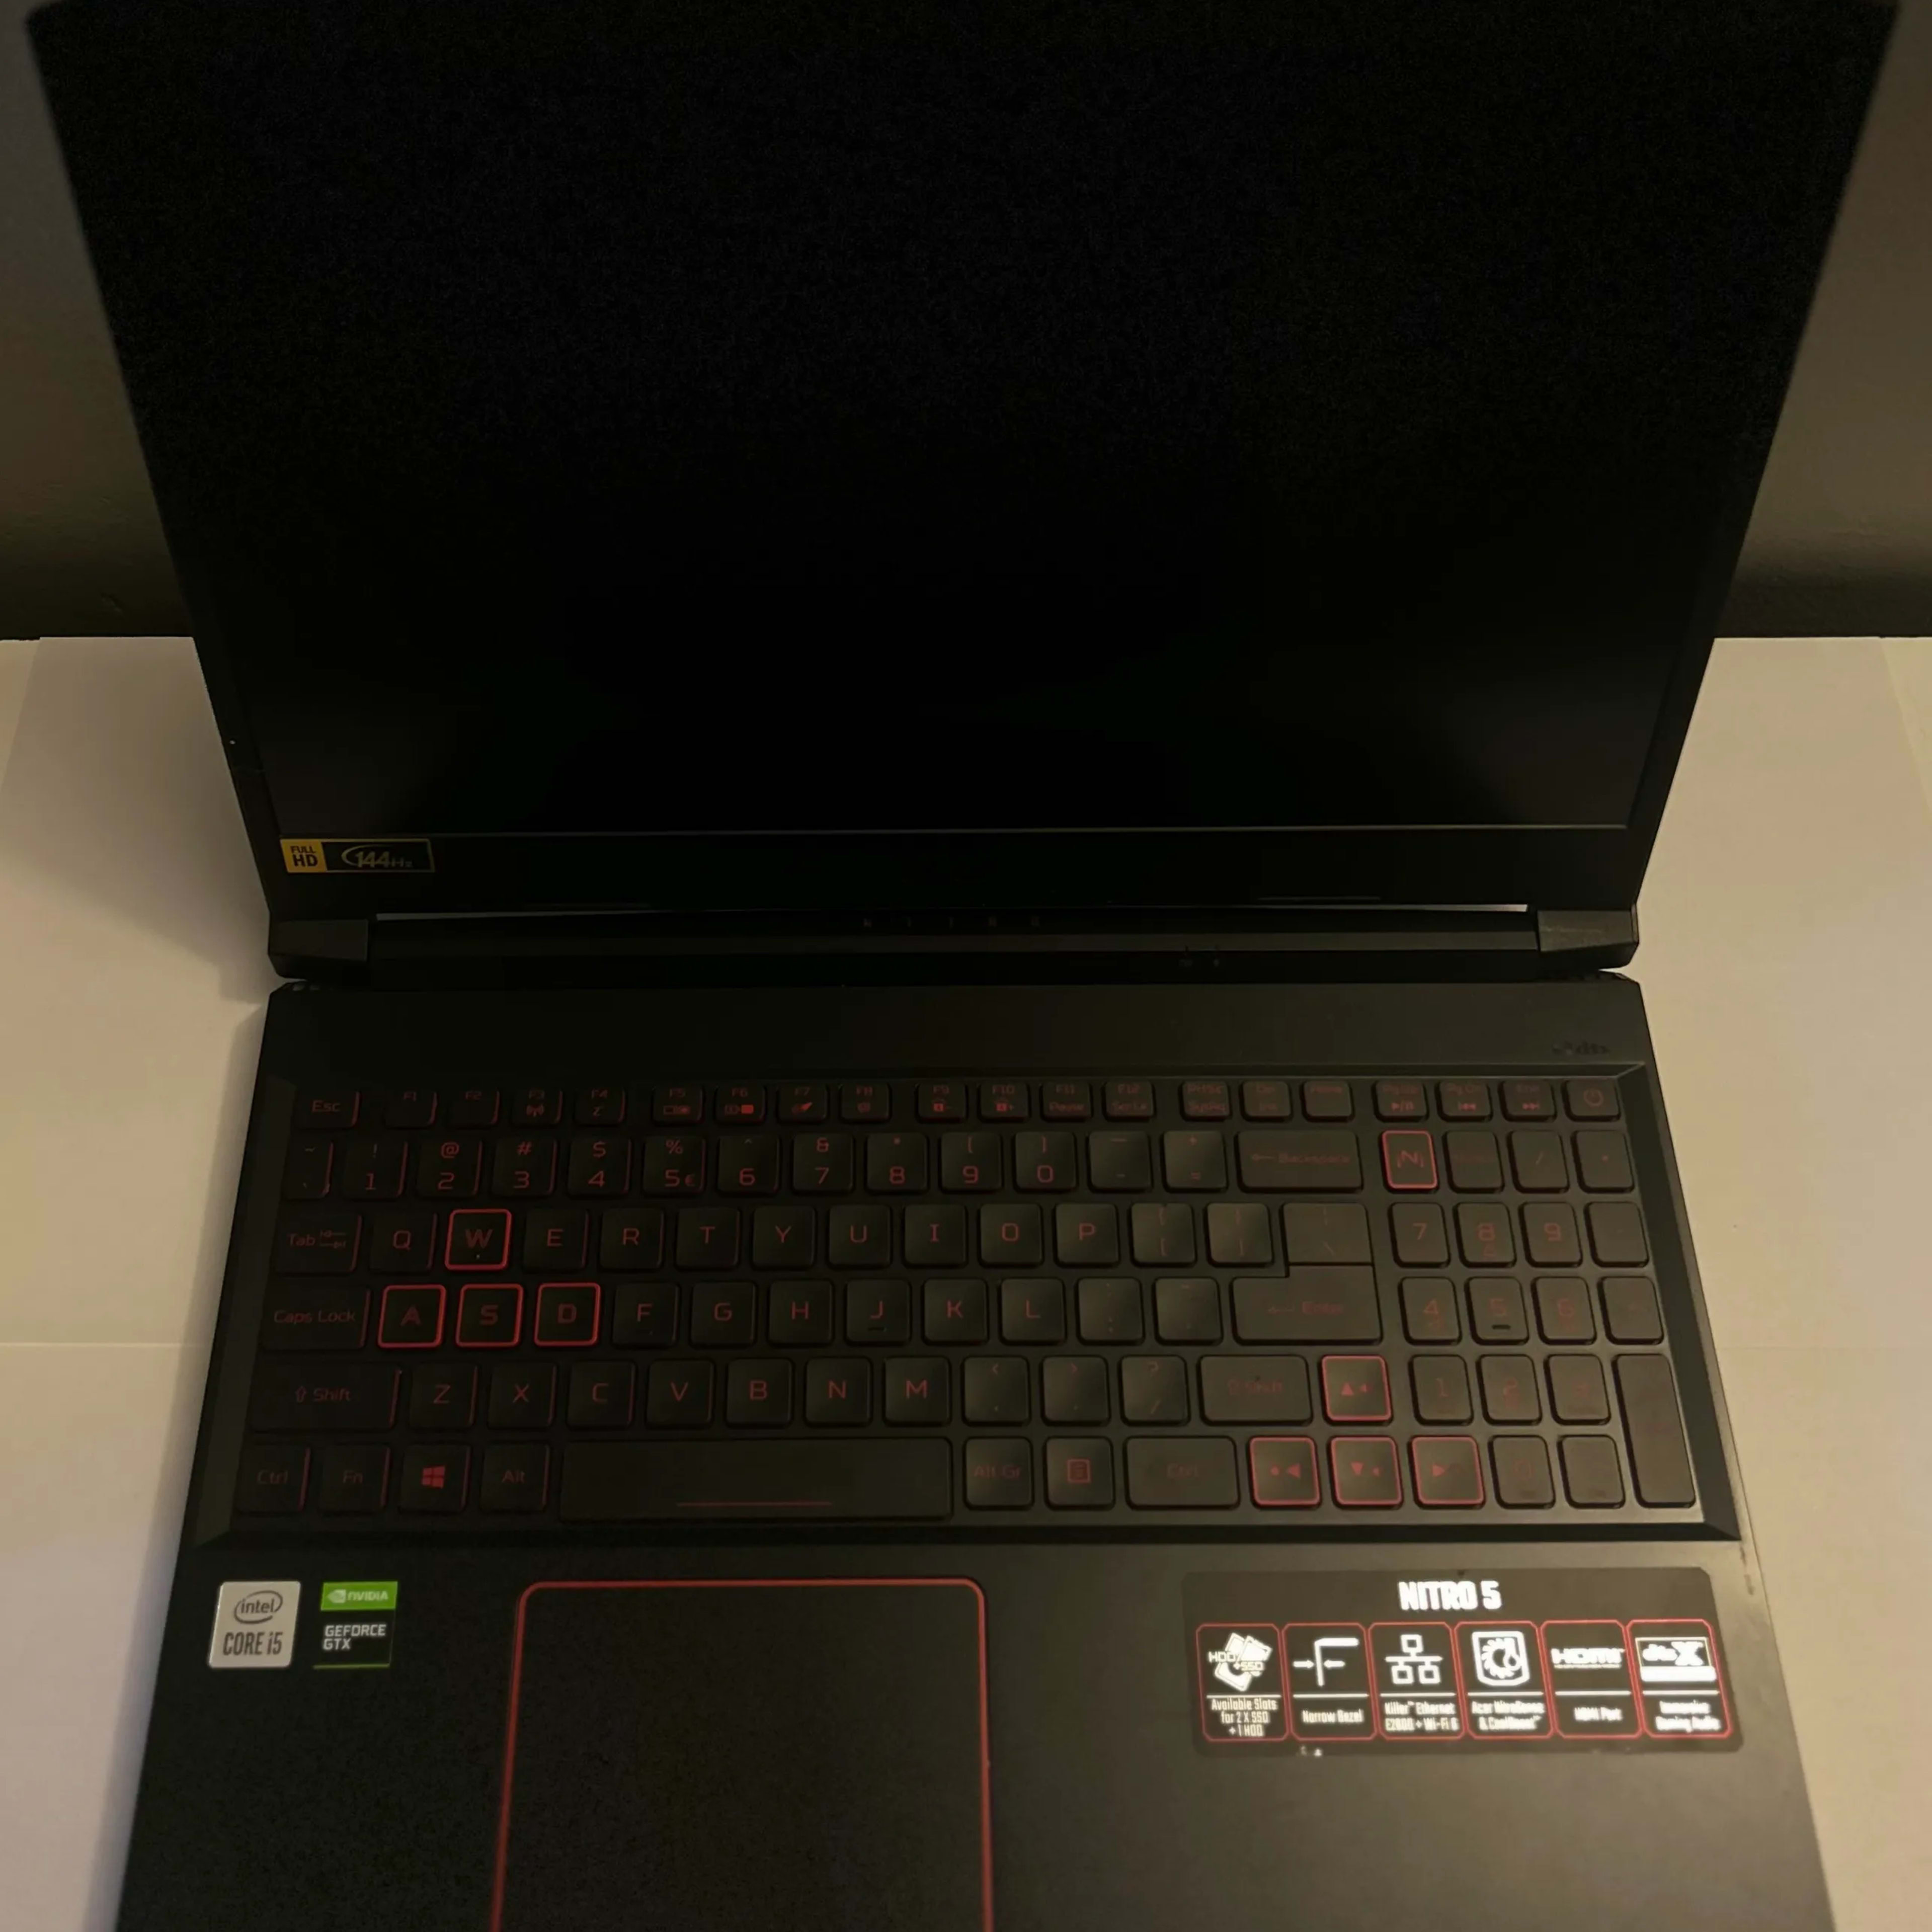 Acer - Nitro 5 15.6" Gaming Laptop|Intel Core i5-10300H|8GB Memory|NVIDIA GeForce GTX 1650